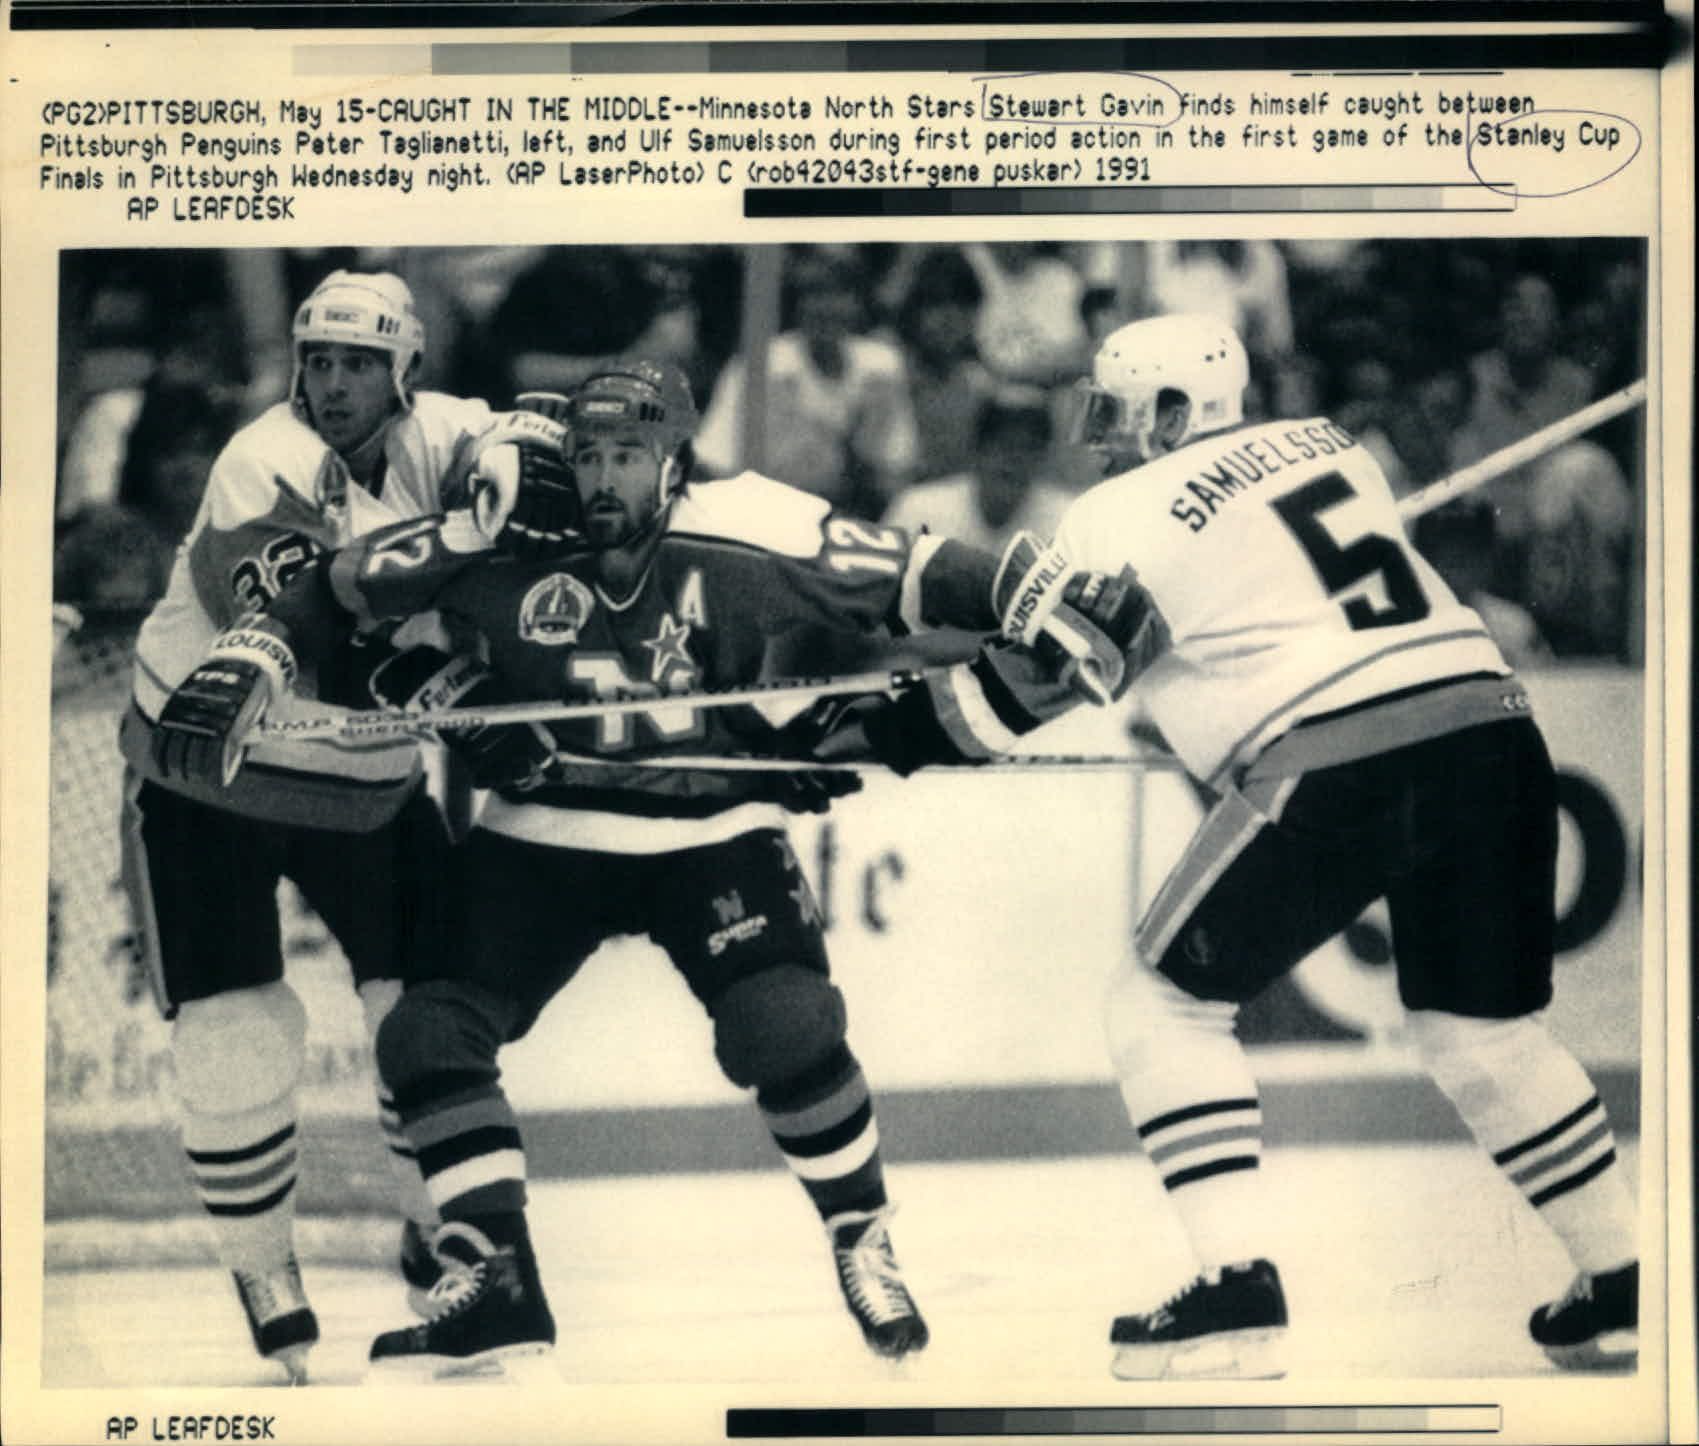 1991 Playoffs Minnesota North Stars Framed Print by B Bennett